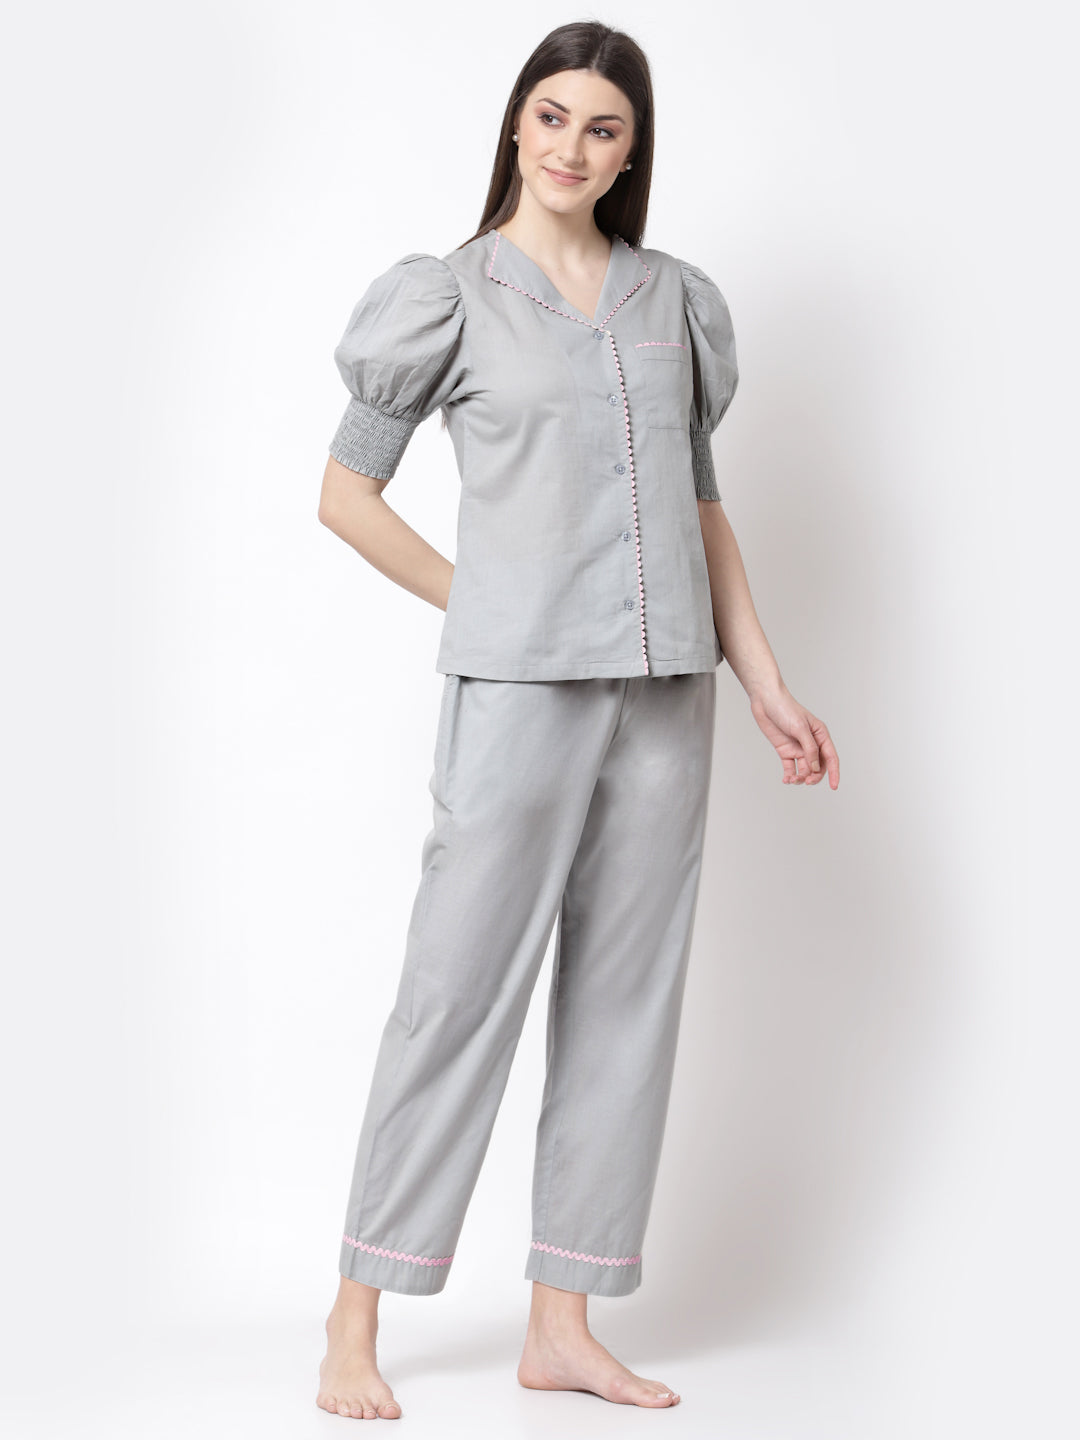 Cute Top & Pajama Set Sleepwear for Girls | Cute tops, Cotton pajamas  women, Night suit